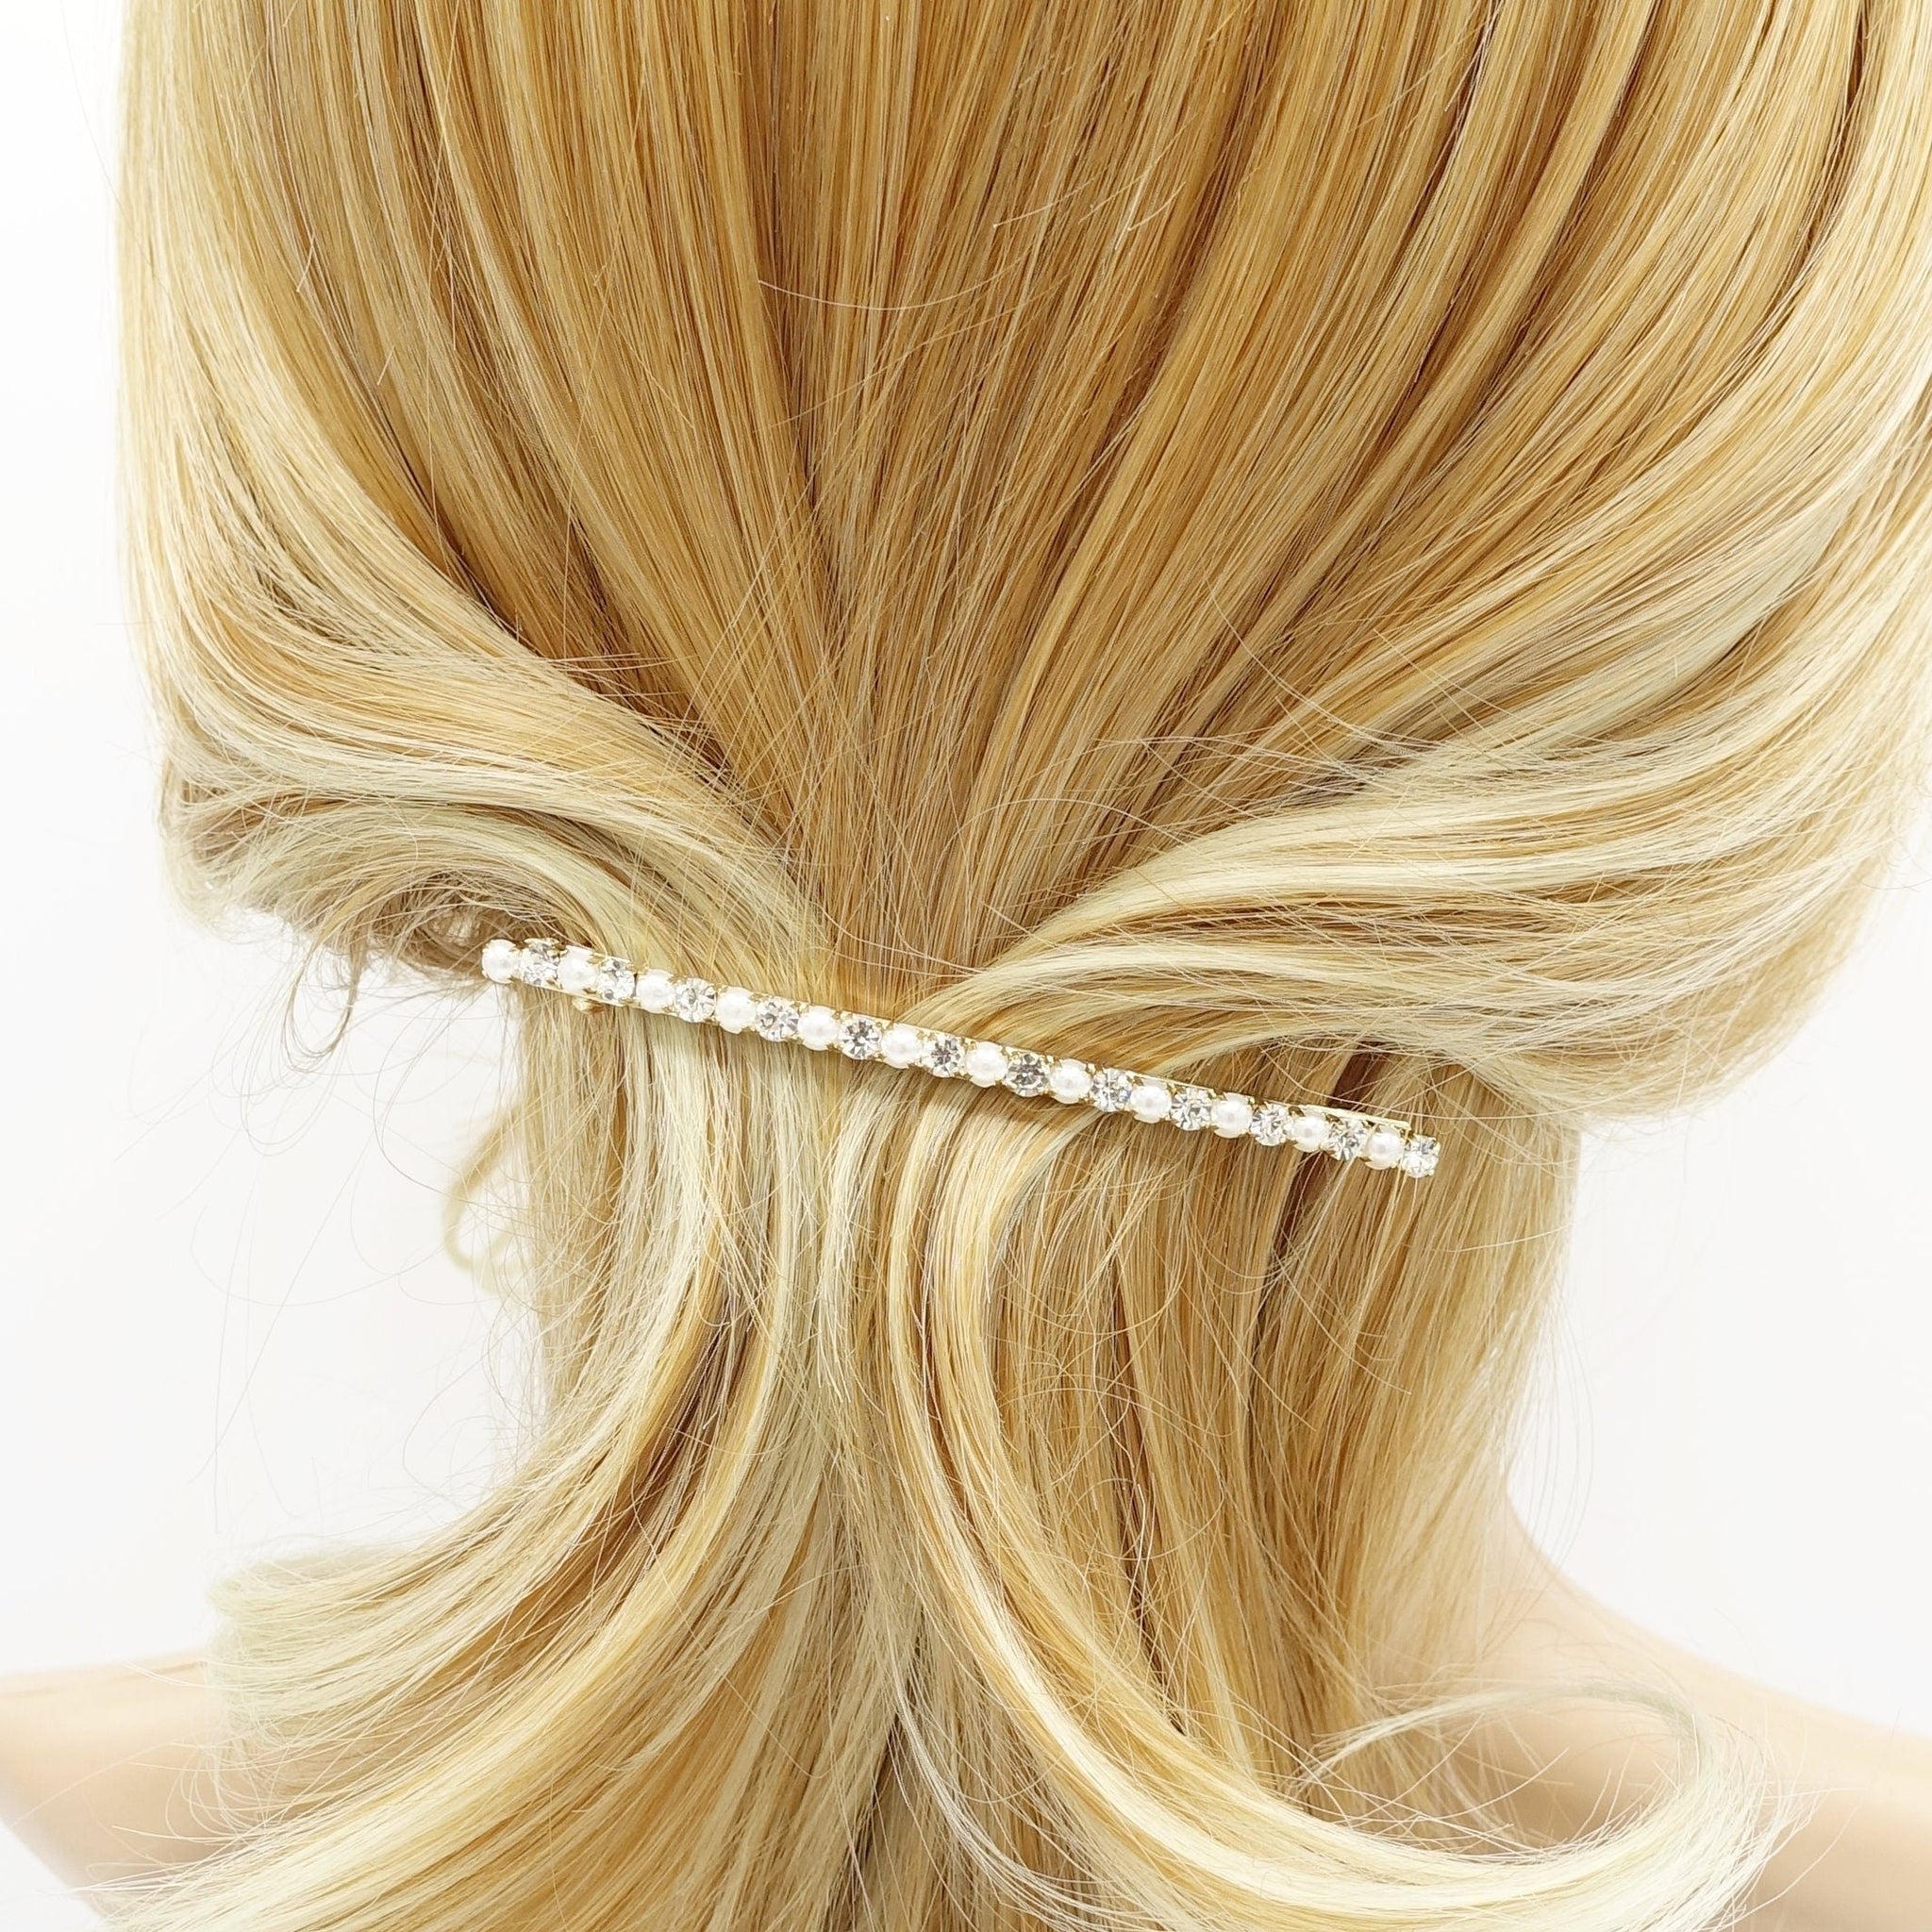 veryshine.com Barrette (Bow) 3.54 rhinestone pearl thin french hair barrette women hair accessory